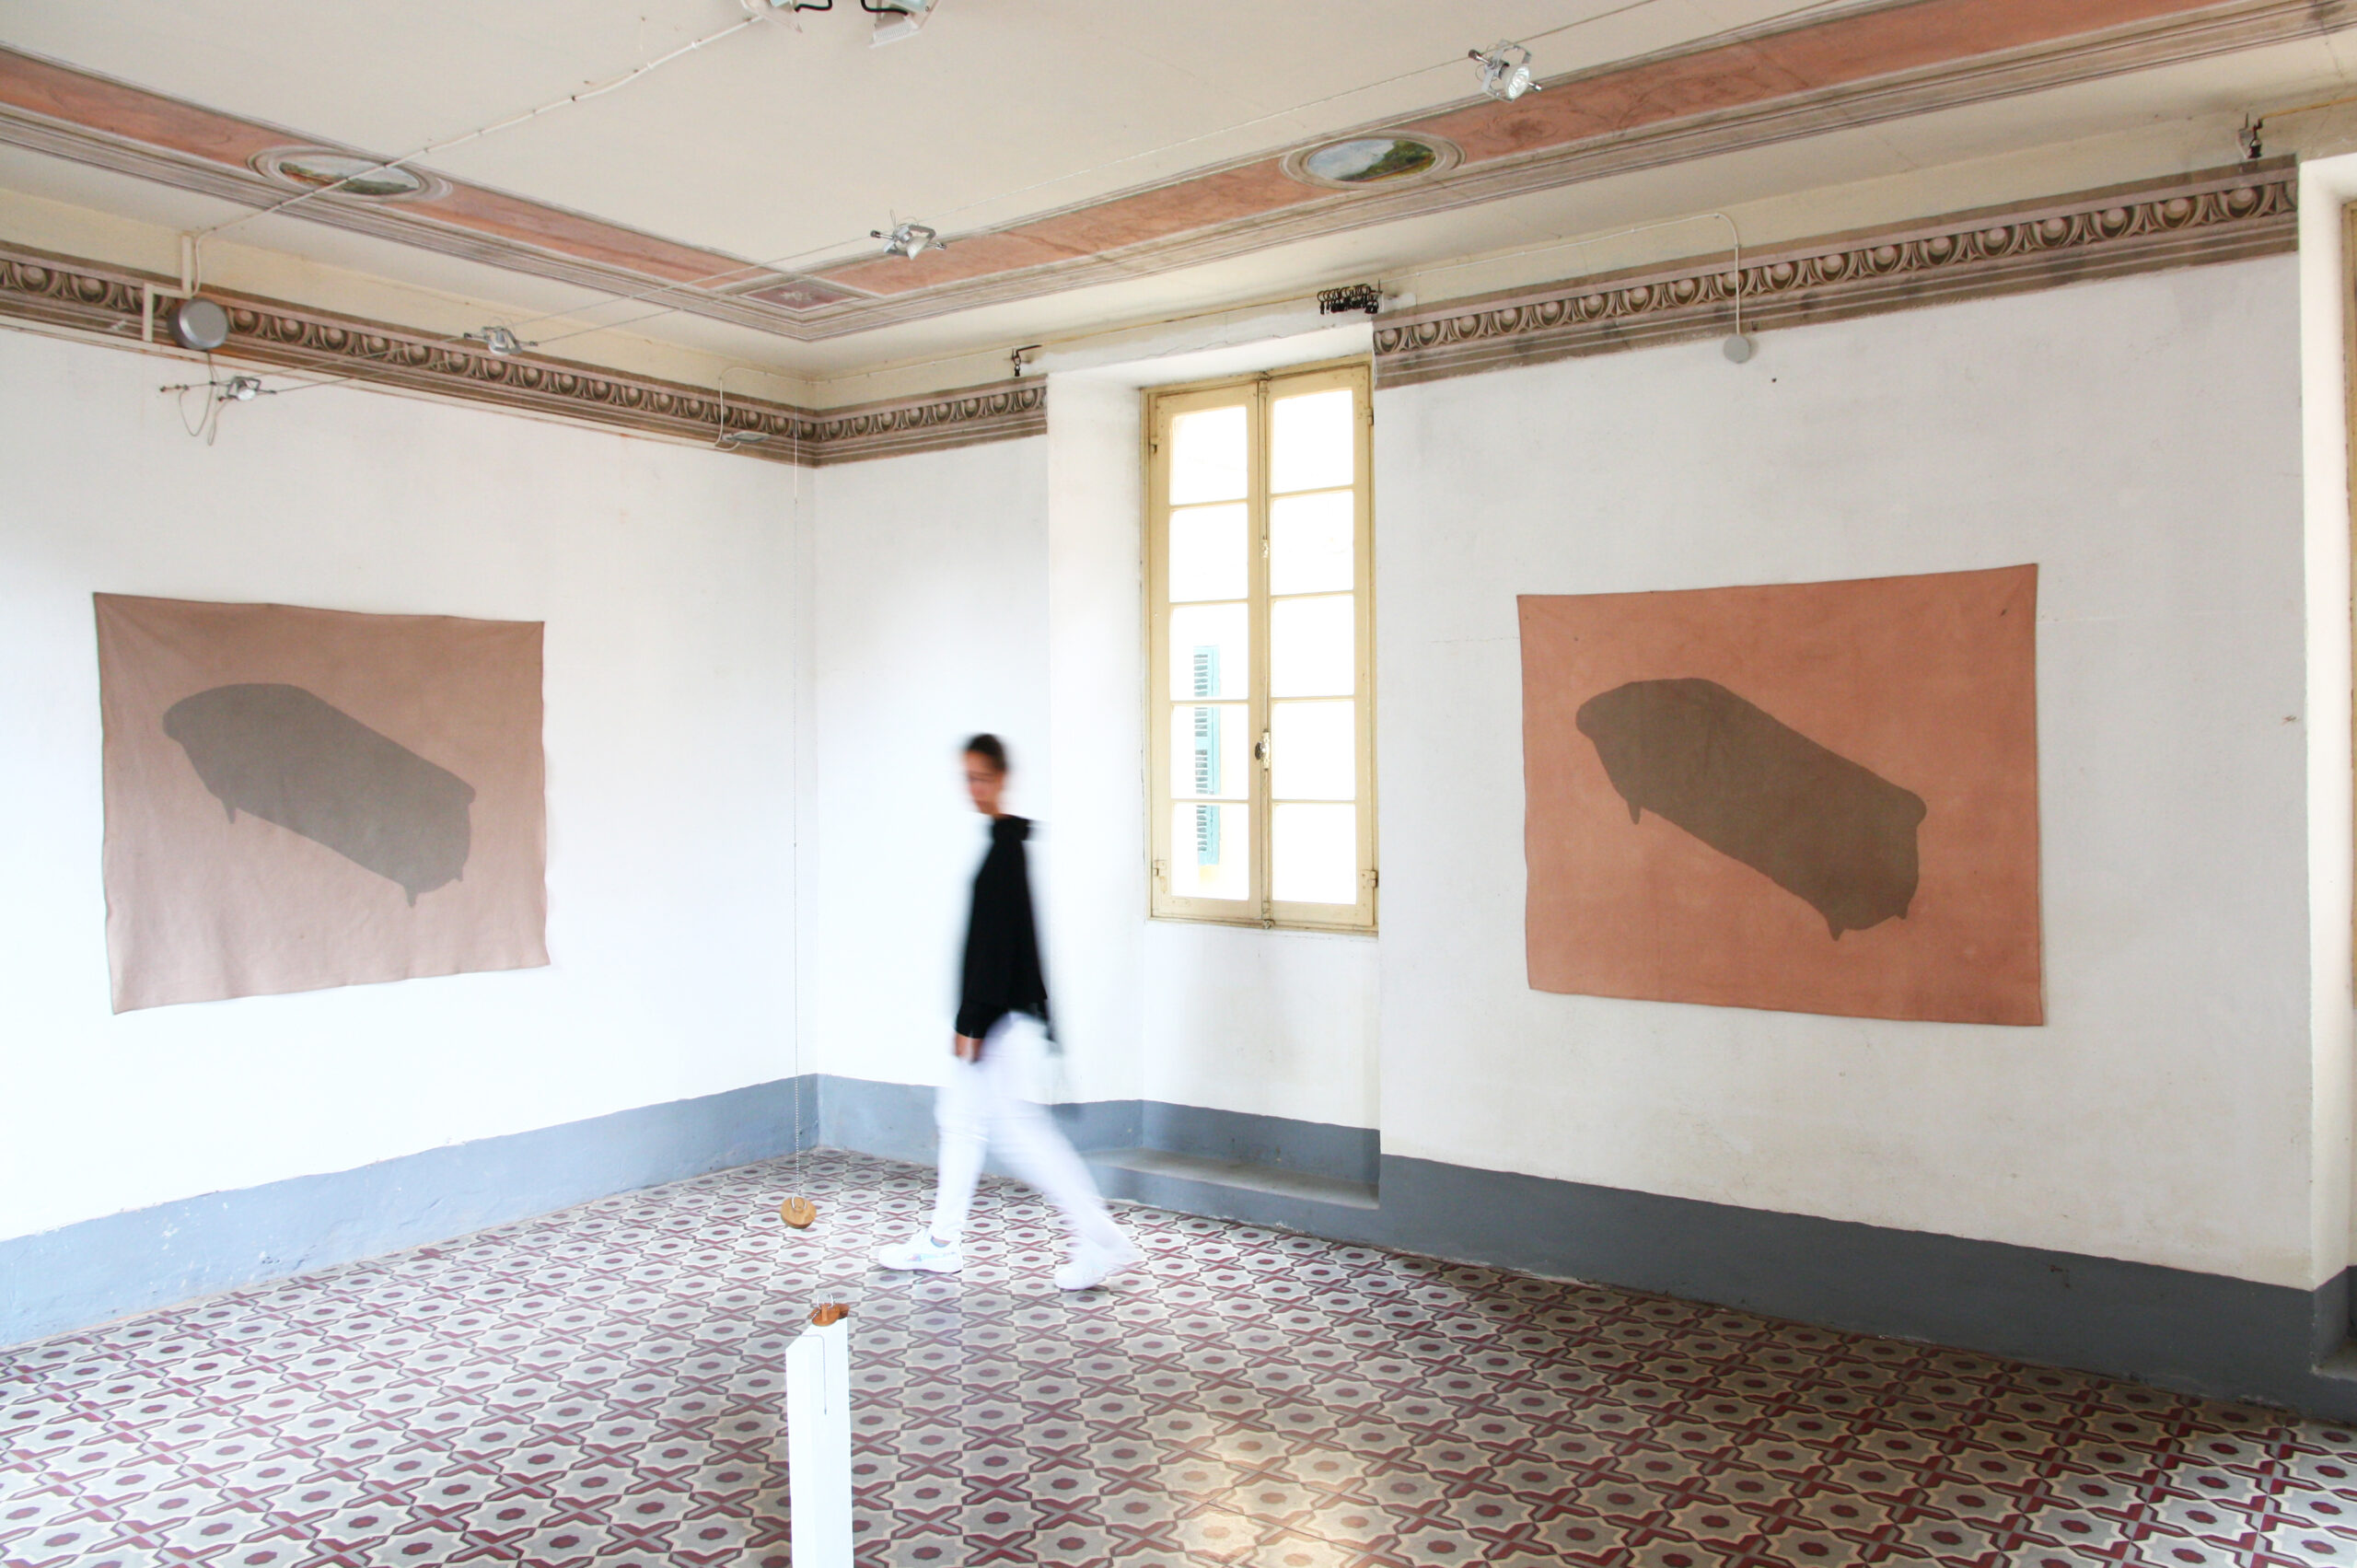 "La Fuite", Natural dyeing on cotton, 150 x 120 cm, Premio Piero Leddi, 2019, Francesca Mussi